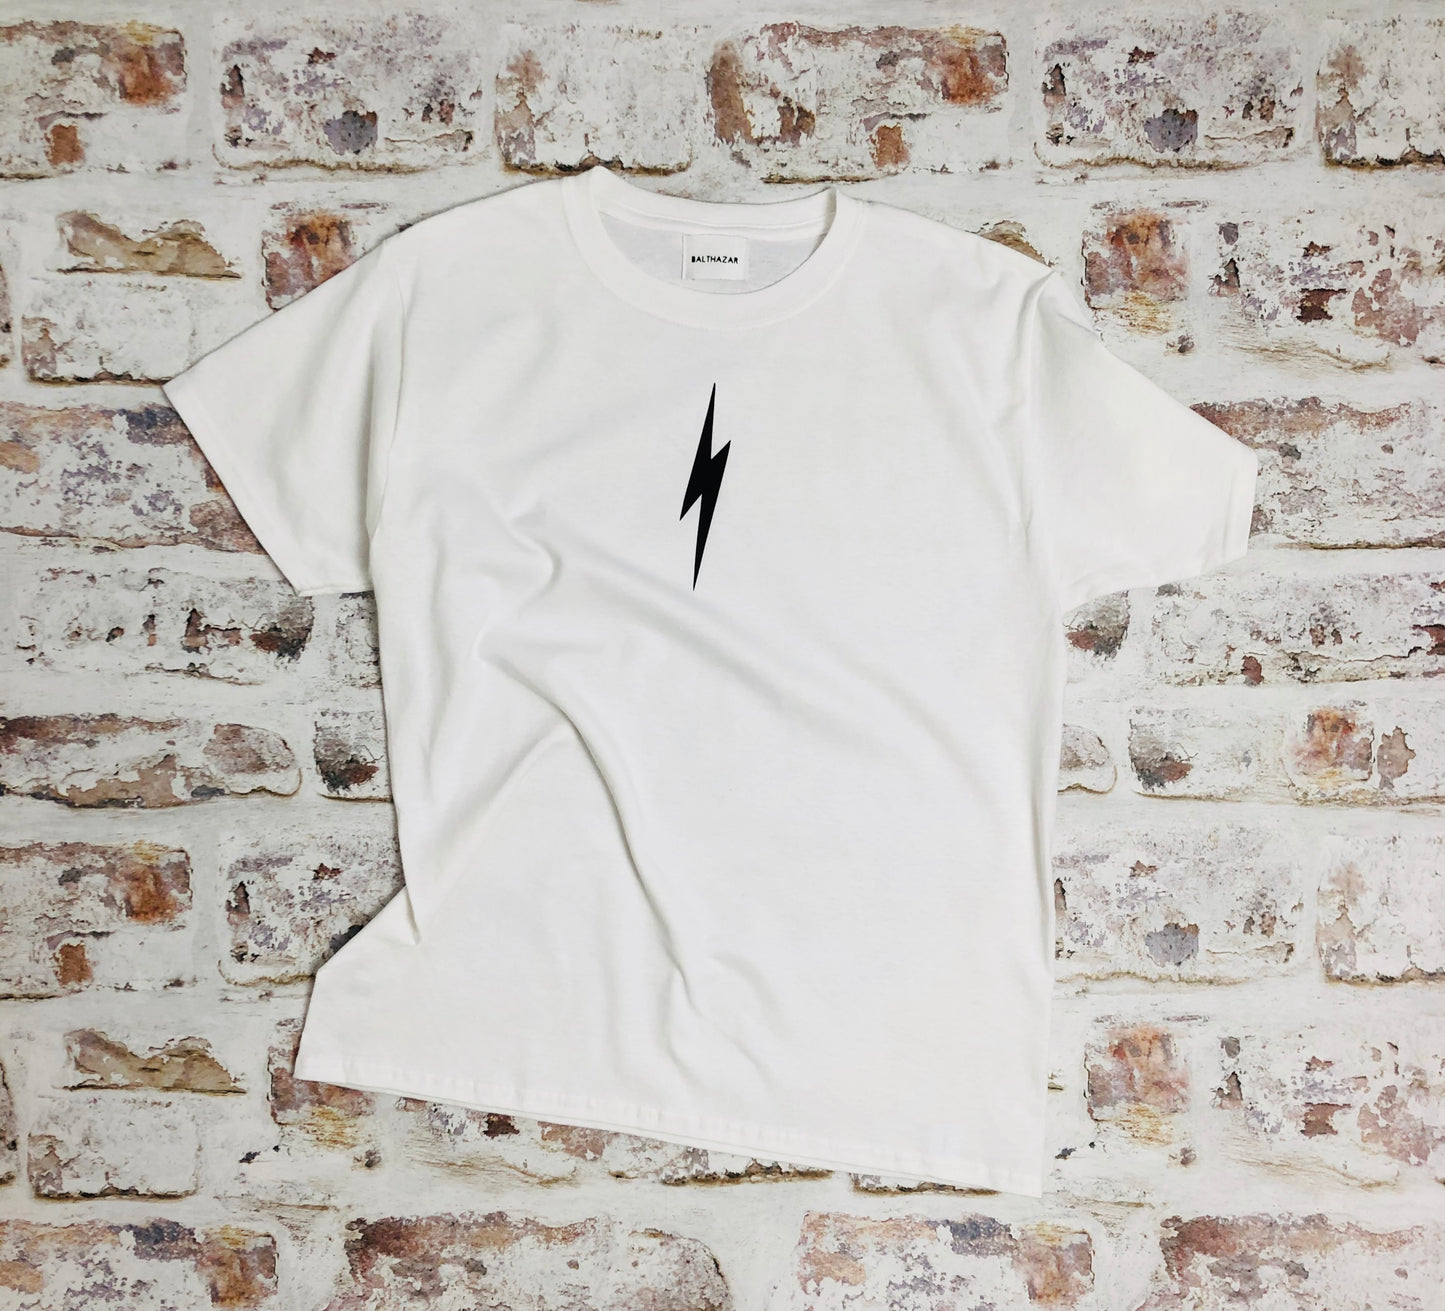 Monochrome lightning bolt t-shirt - Unisex style